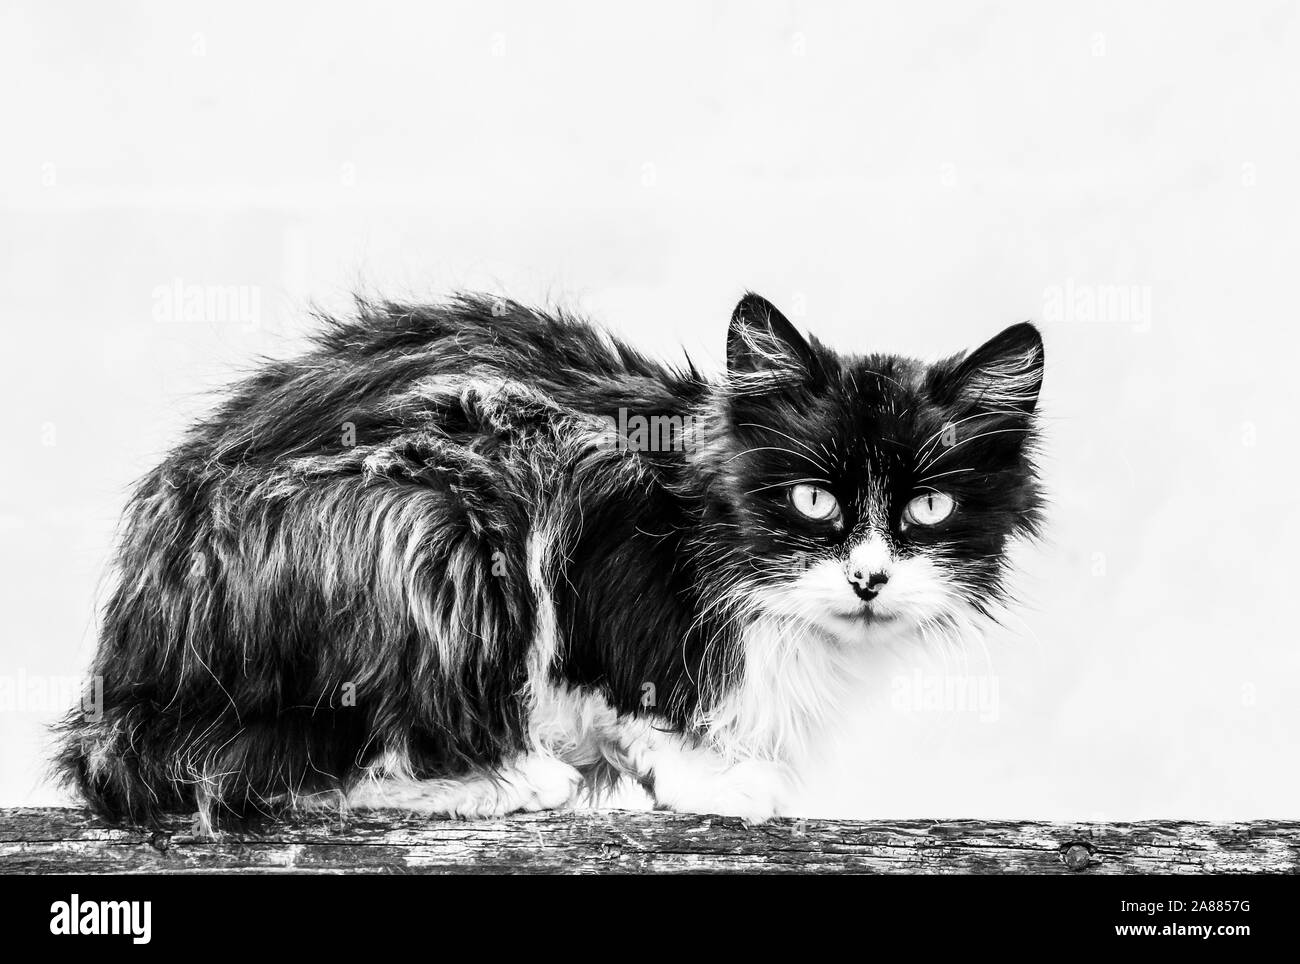 big homeless shaggy black and white cat. Photo. Stock Photo